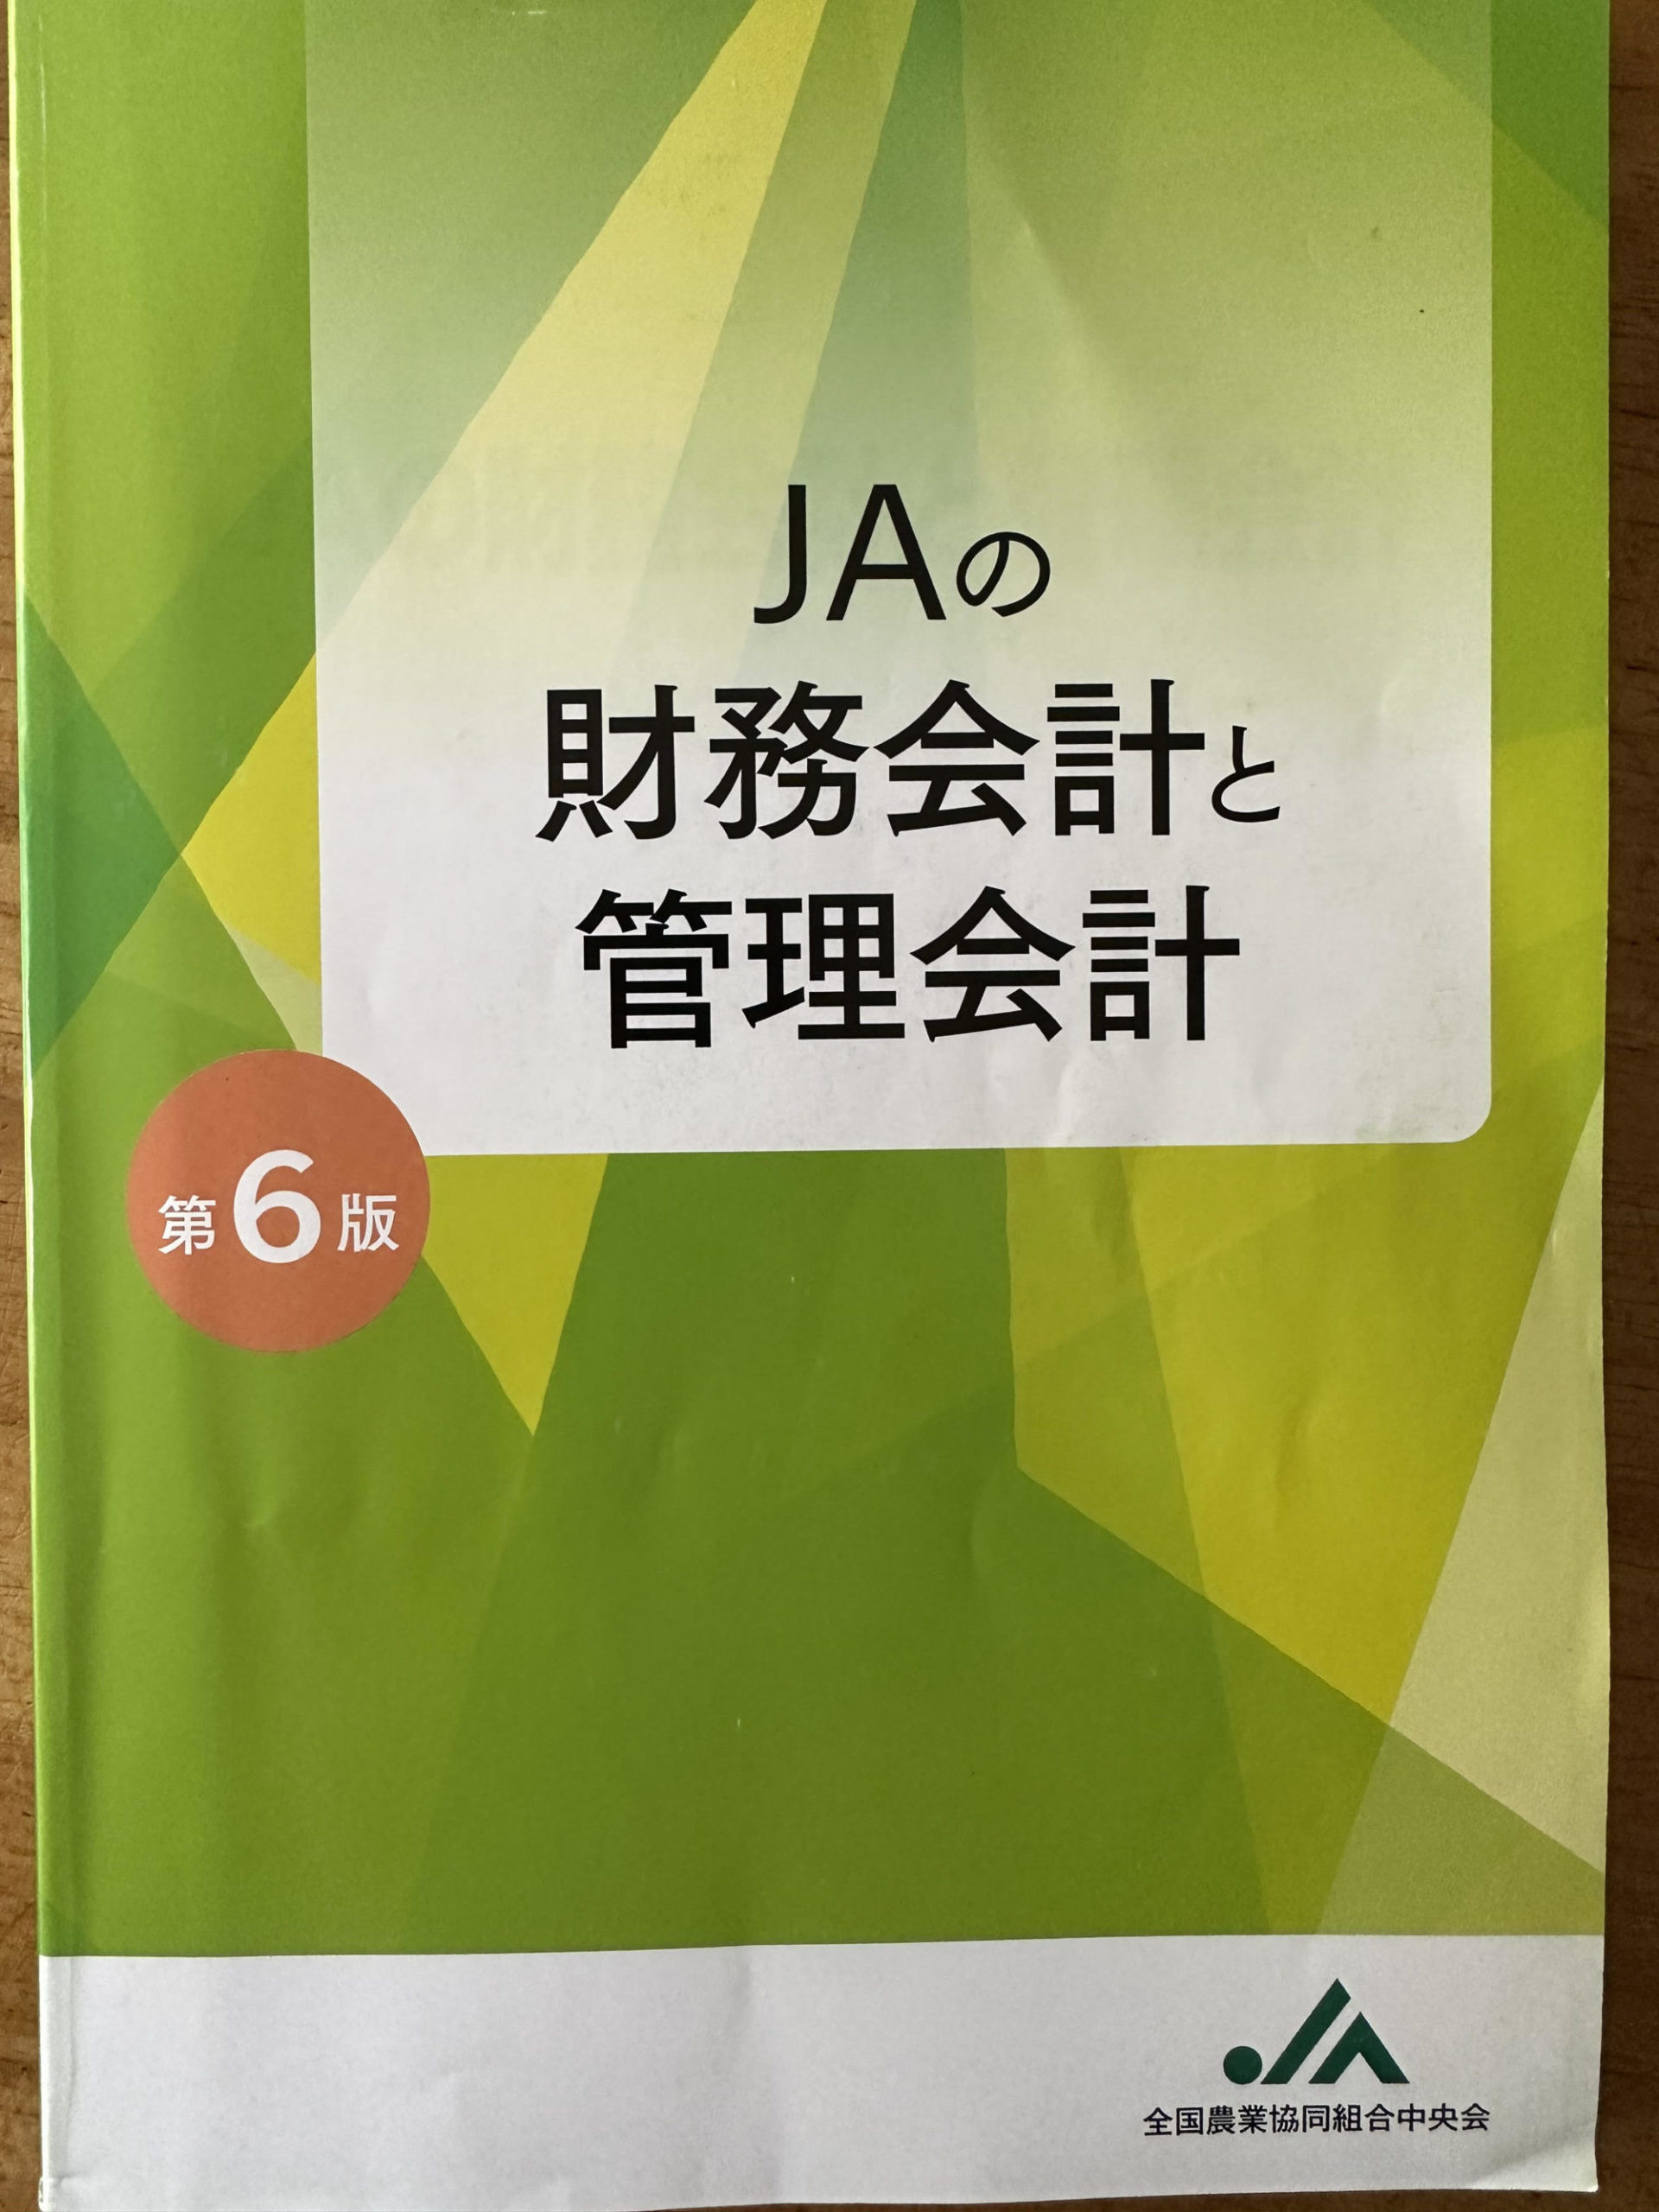 JA内部監査士試験 参考書 テキスト 一式 - 参考書